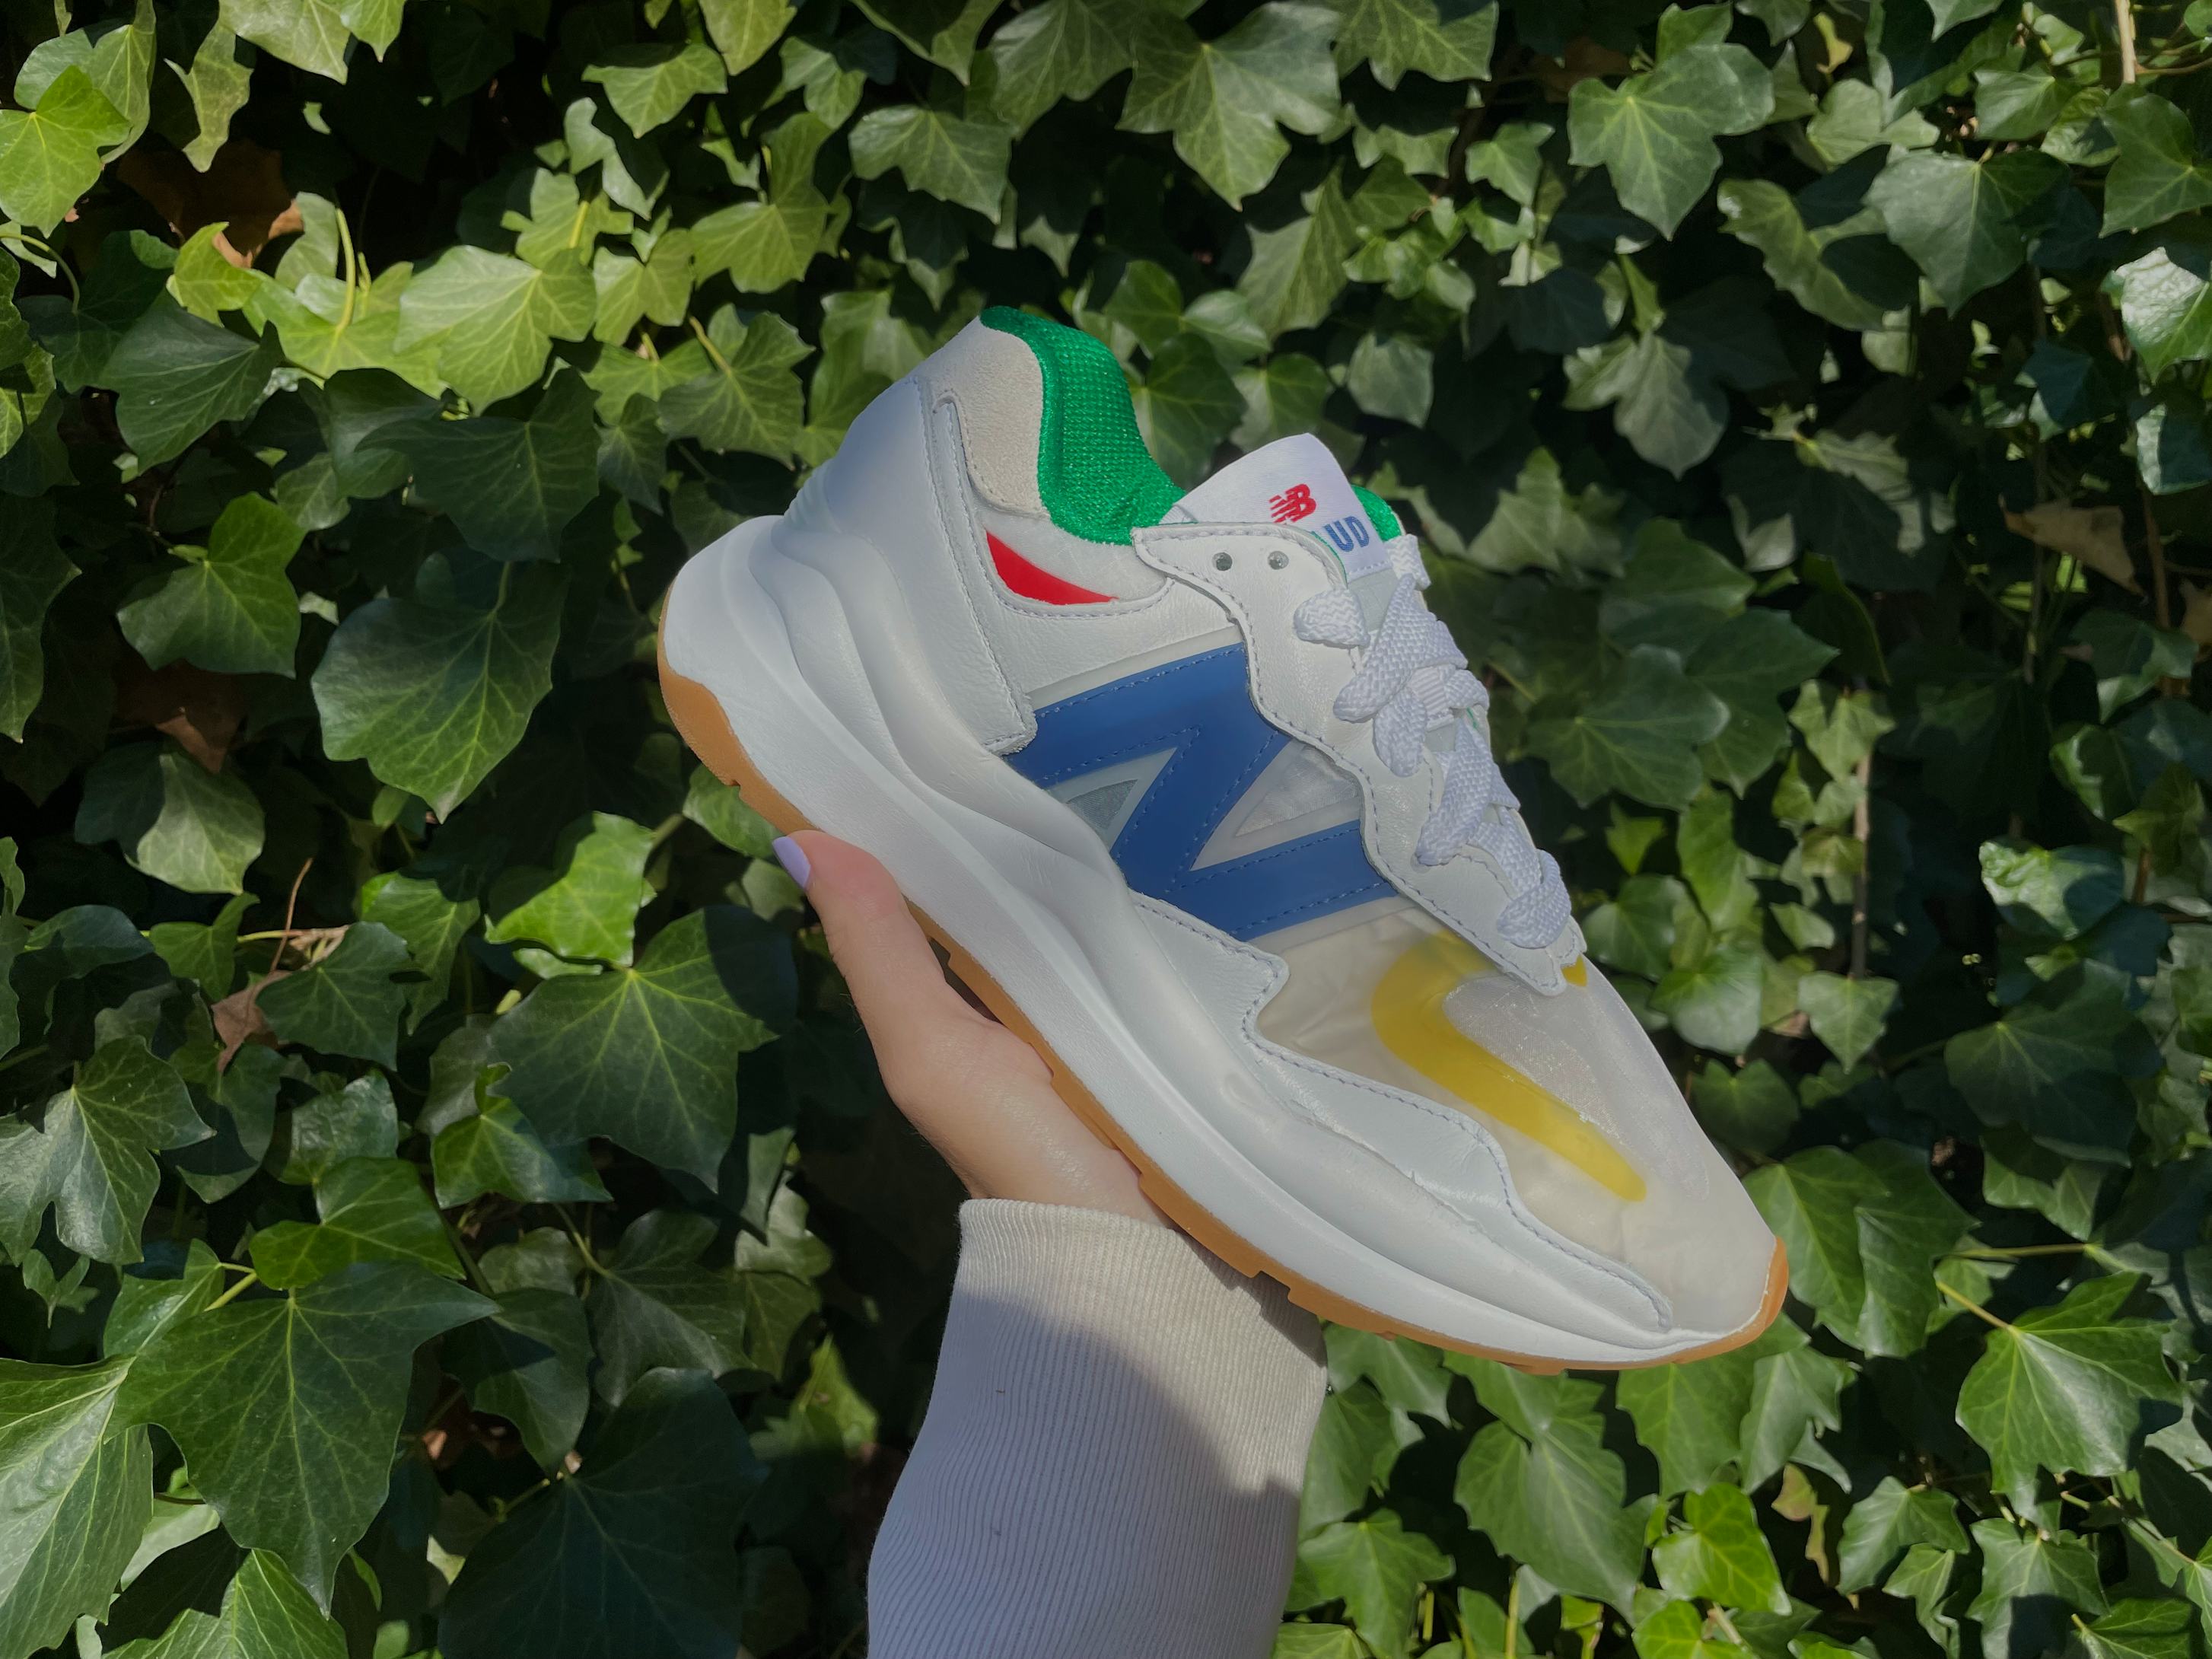 Wearing New Balance’s STAUD 57/40: An amazing ‘80s-inspired sneaker